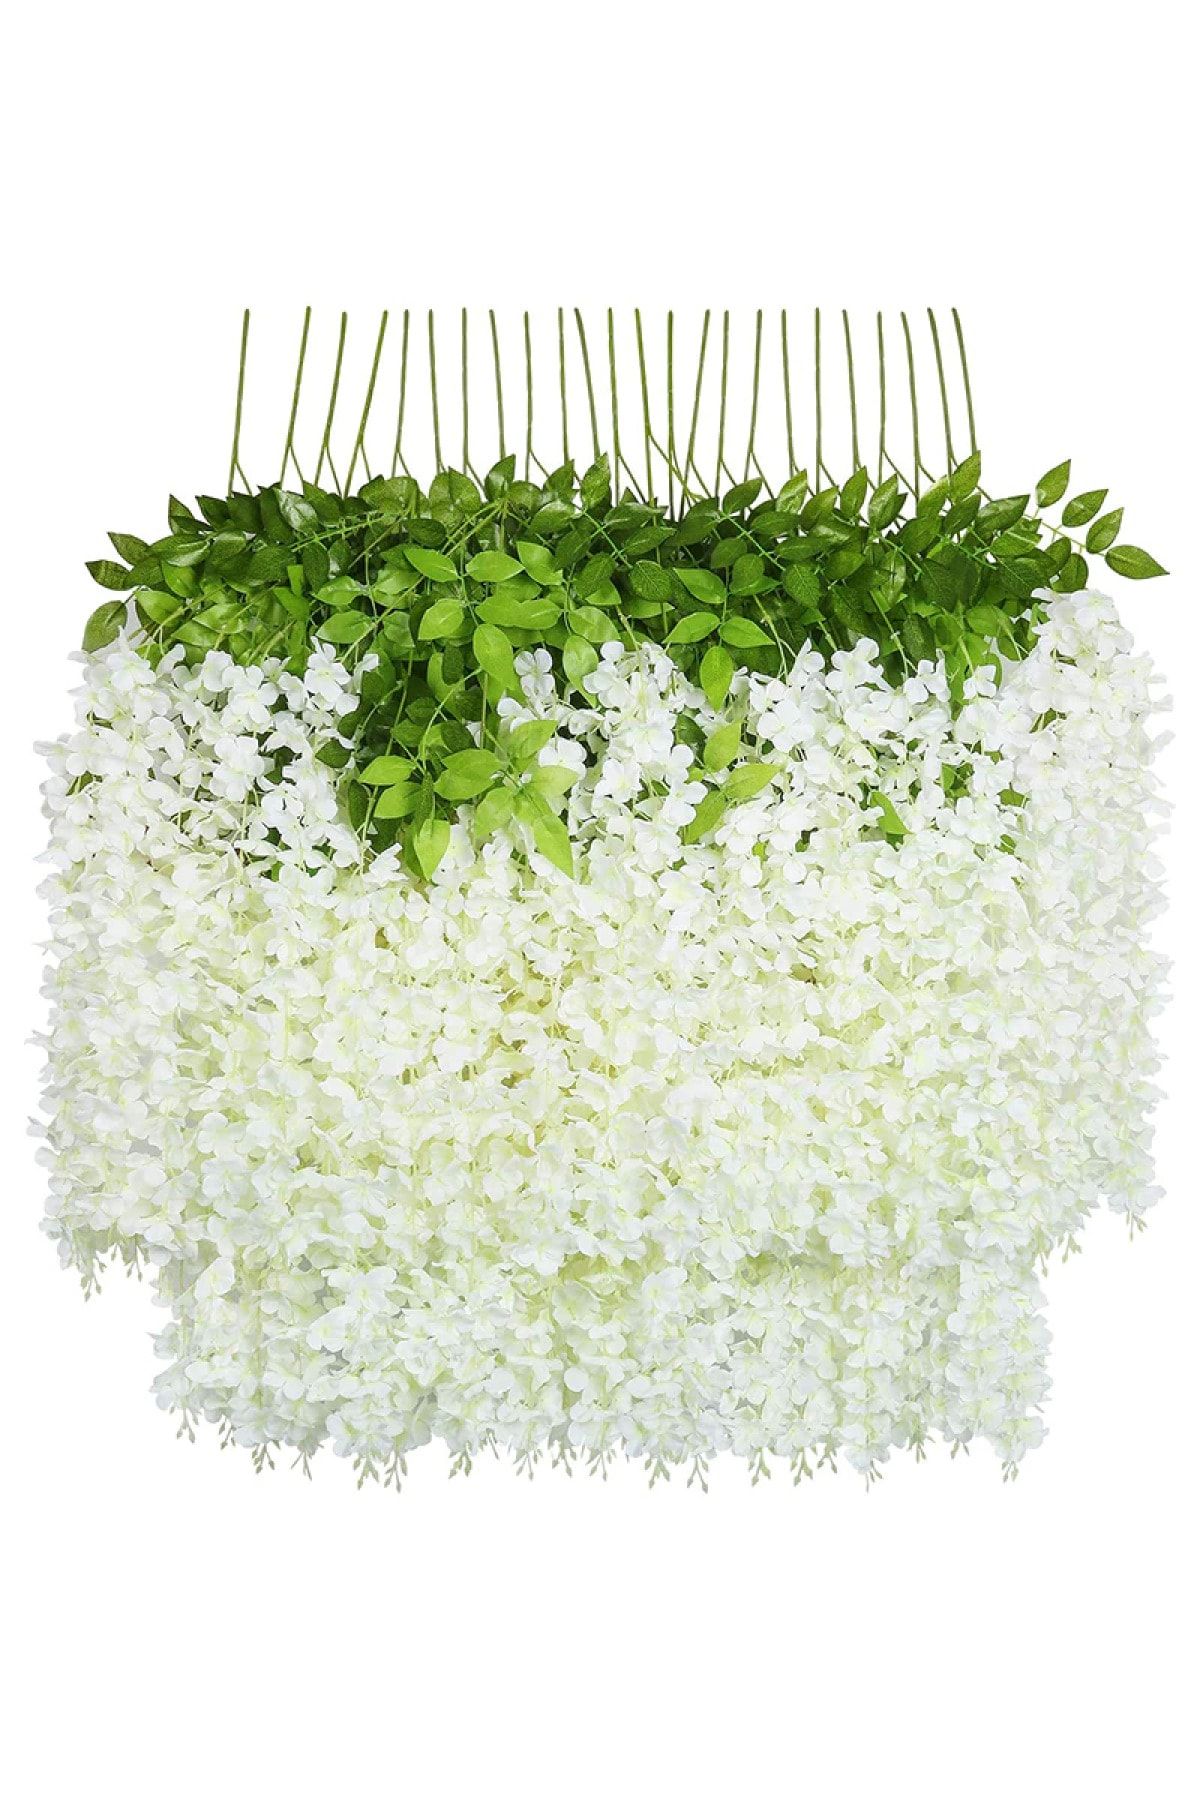 Yapay Çiçek Deposu Yapay Sarkan Akasya Çiçeği 80-110 Cm Beyaz 12li Paket